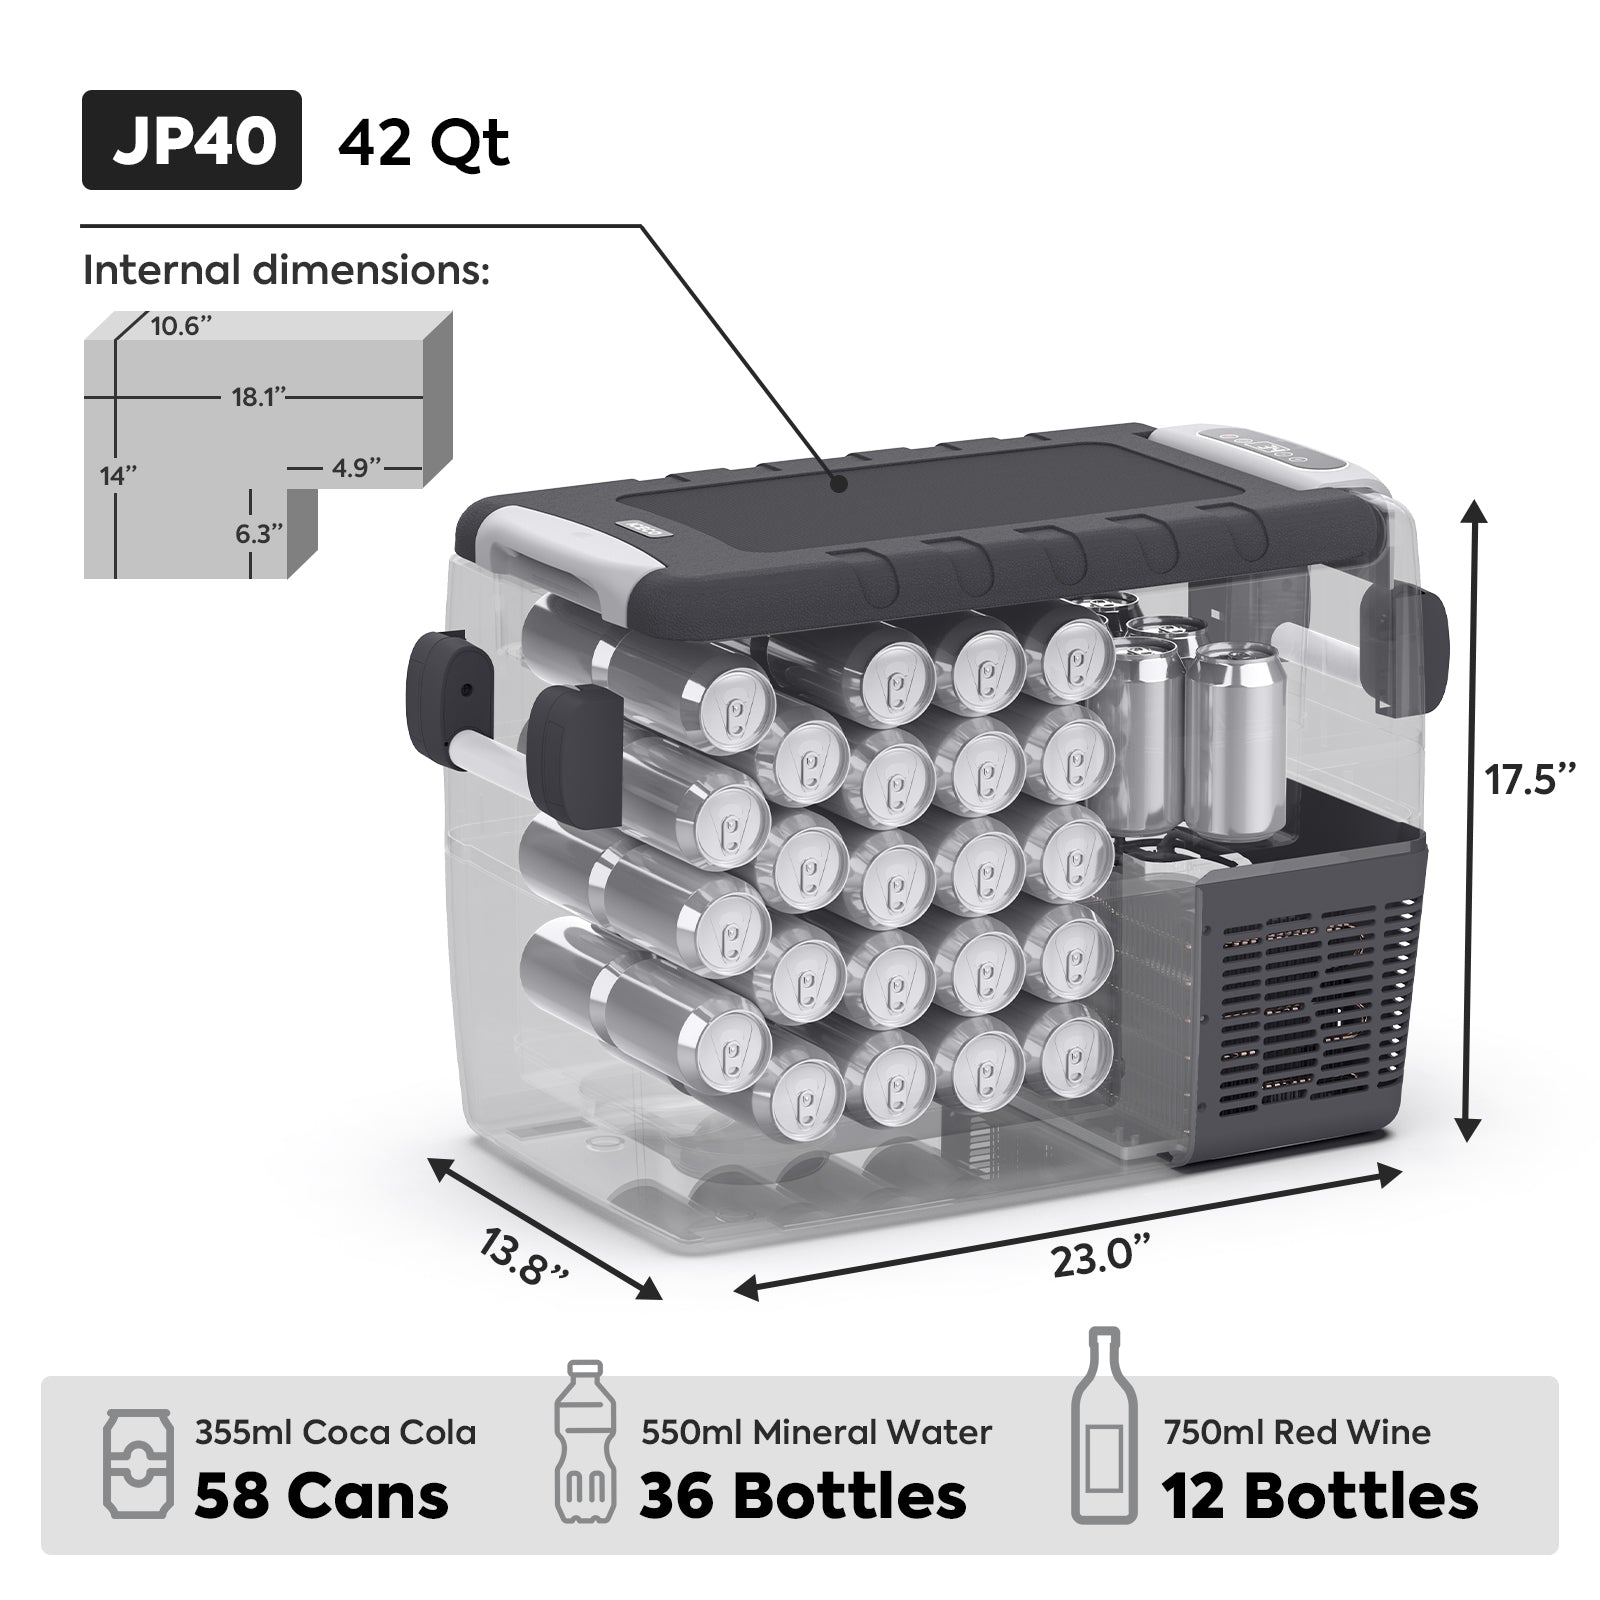 42QT JP40 12V APP Controlled Refrigerator Portable Freezer| ICECO-Portable Fridge-www.icecofreezer.com